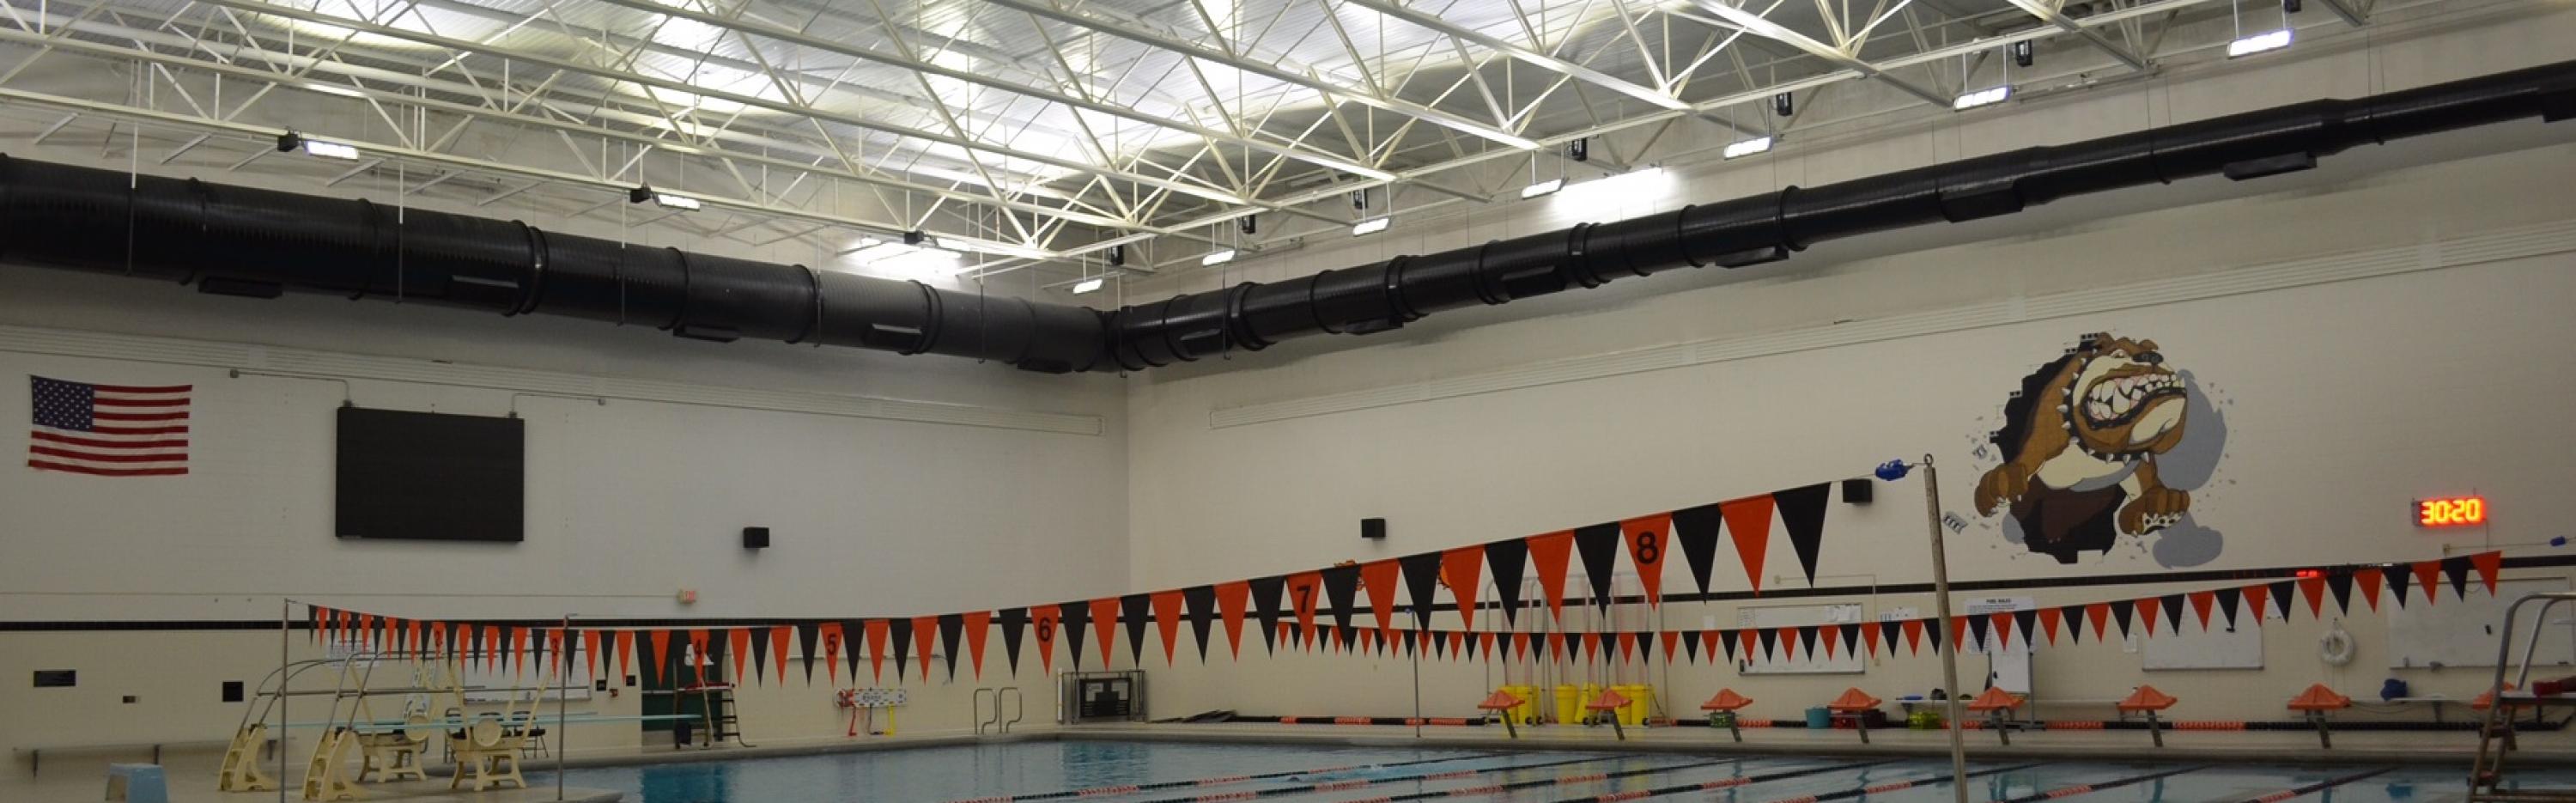 Byron High School aquatic center with LED lighting